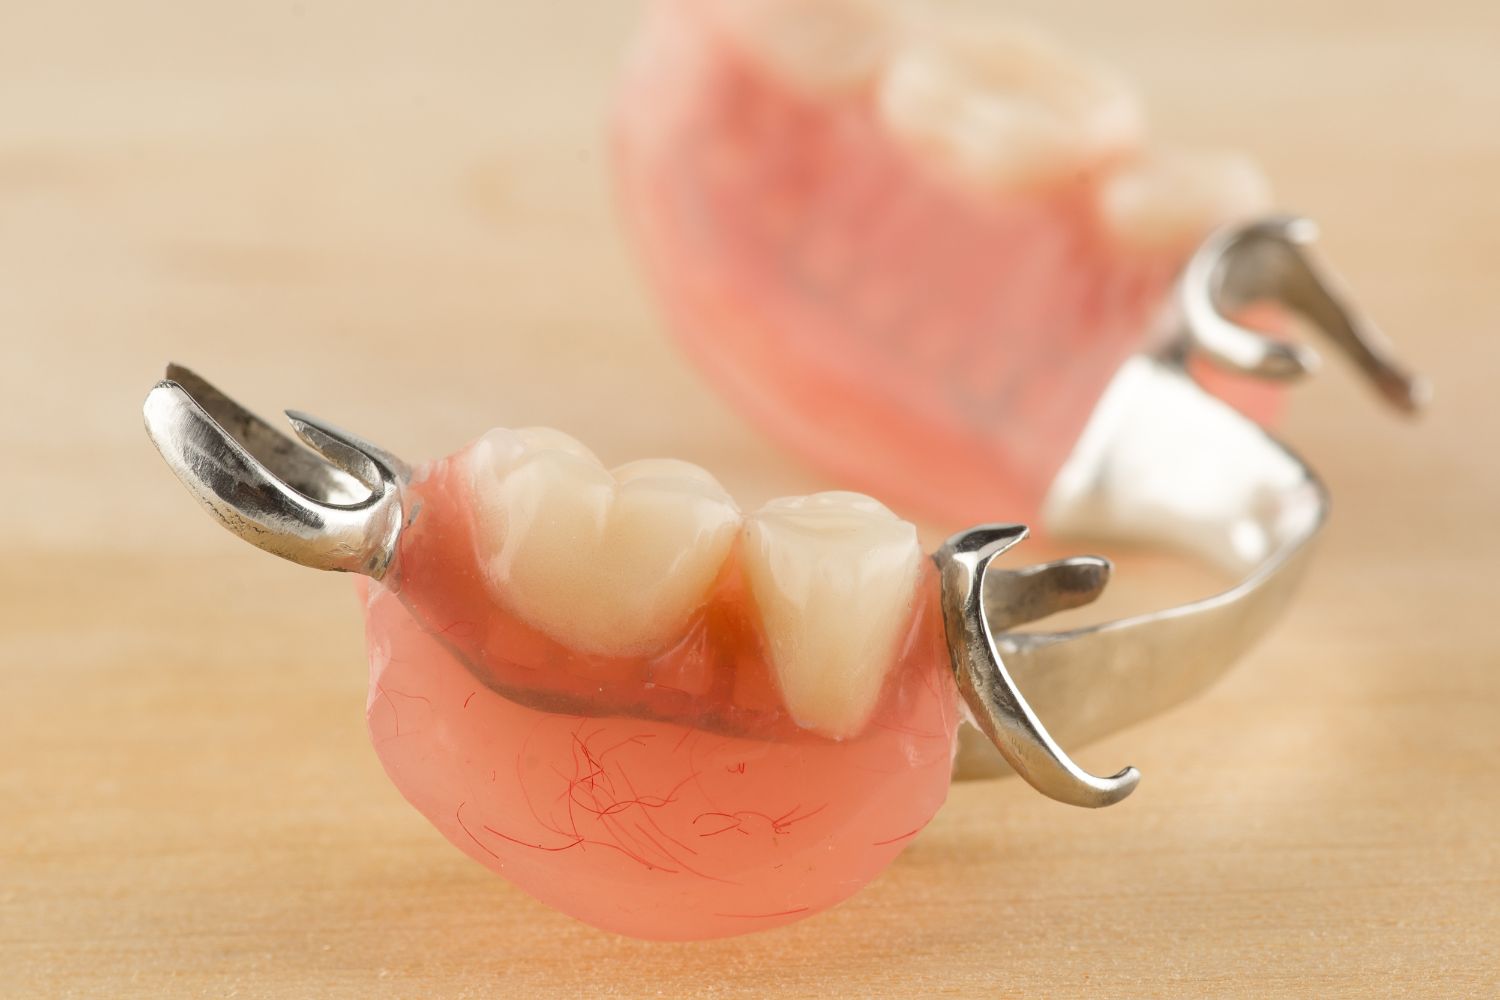 Prótesis dental removible: Ventajas y desventajas